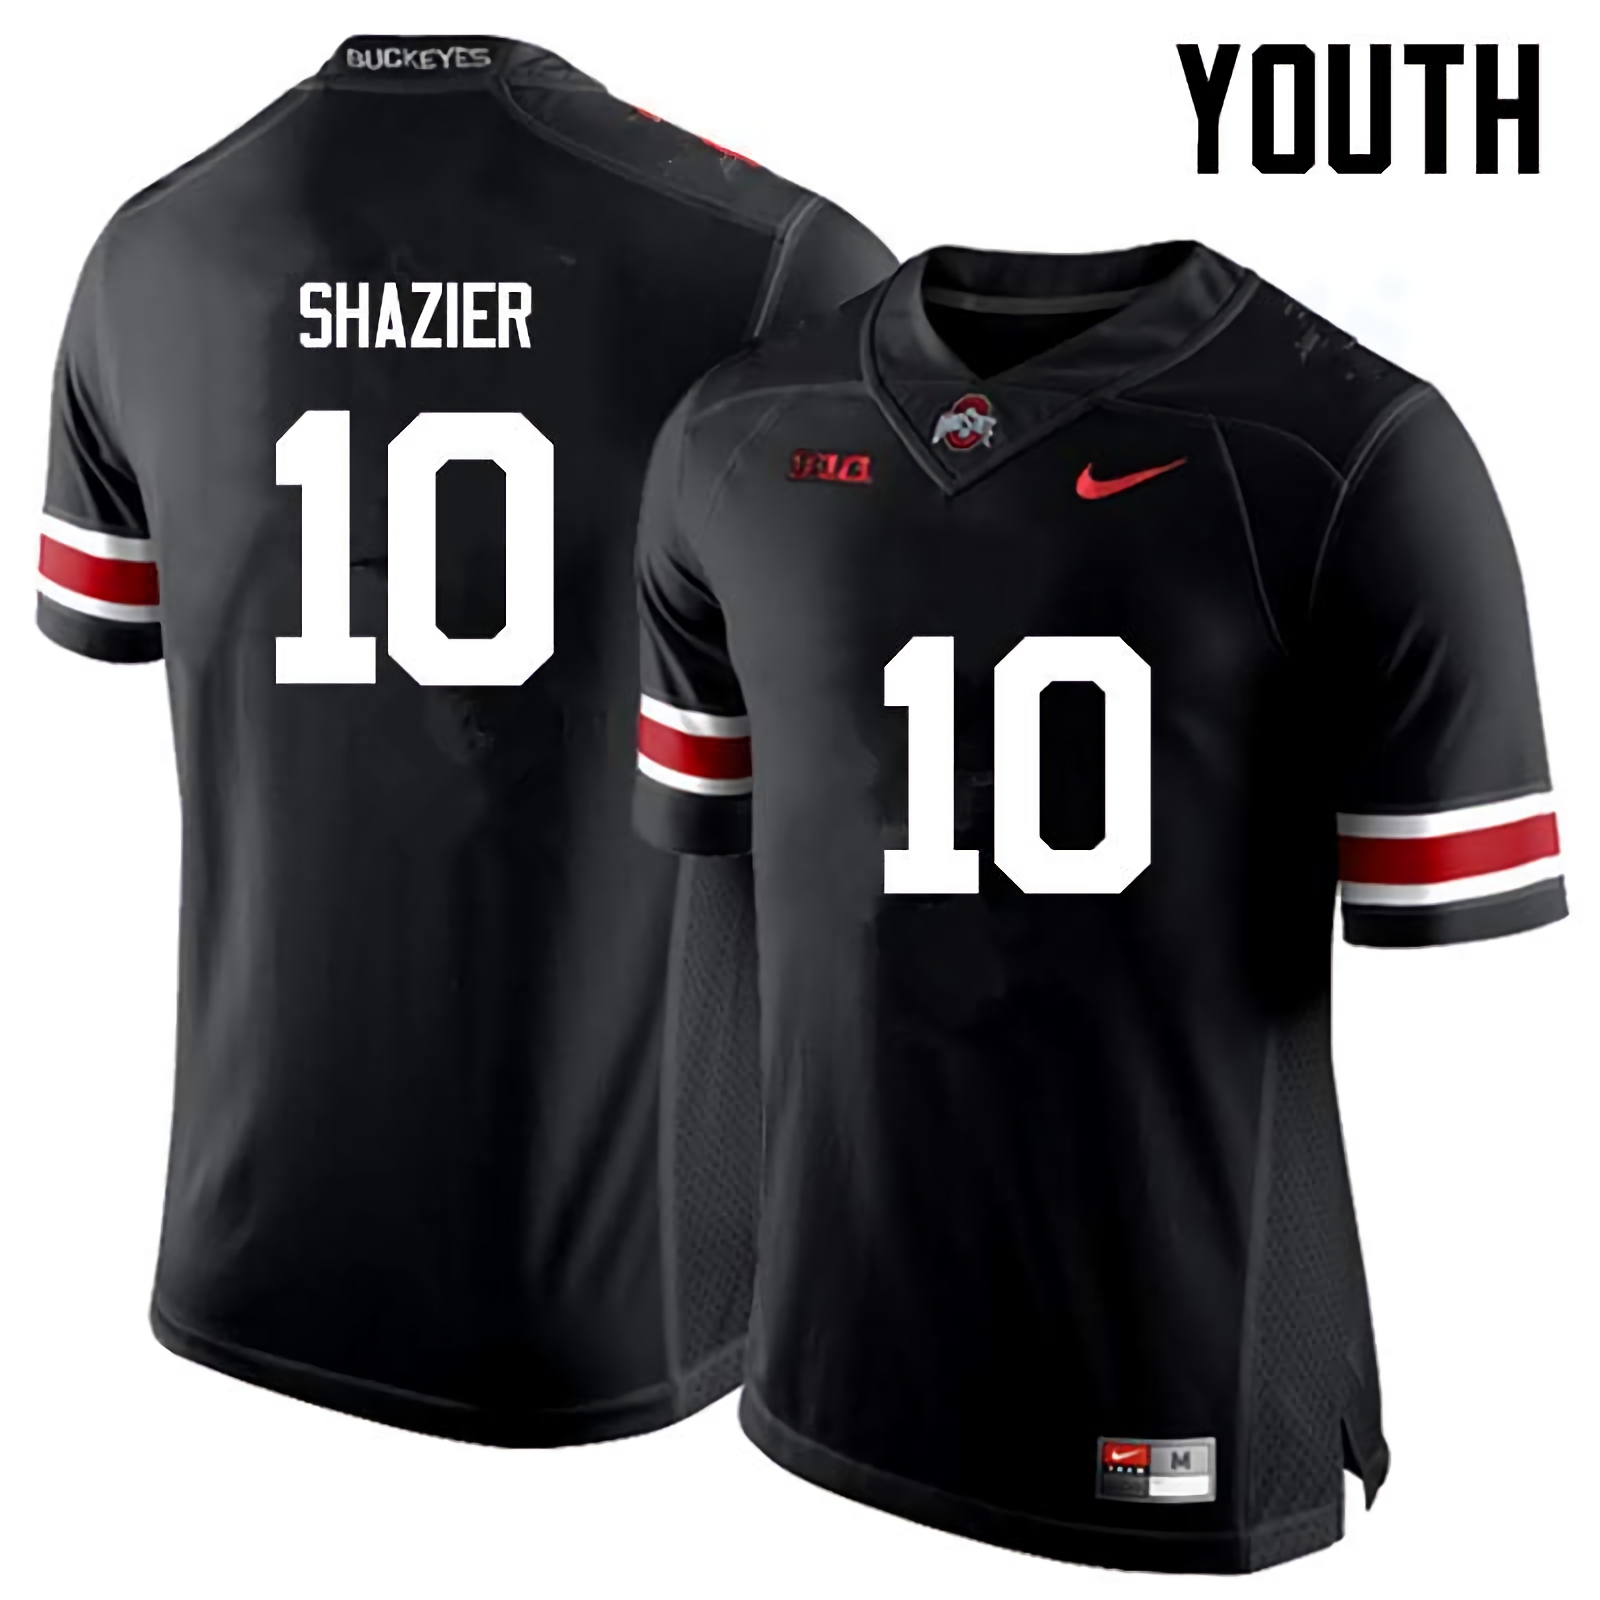 Ryan Shazier Ohio State Buckeyes Youth NCAA #10 Nike Black College Stitched Football Jersey JRU2456HO